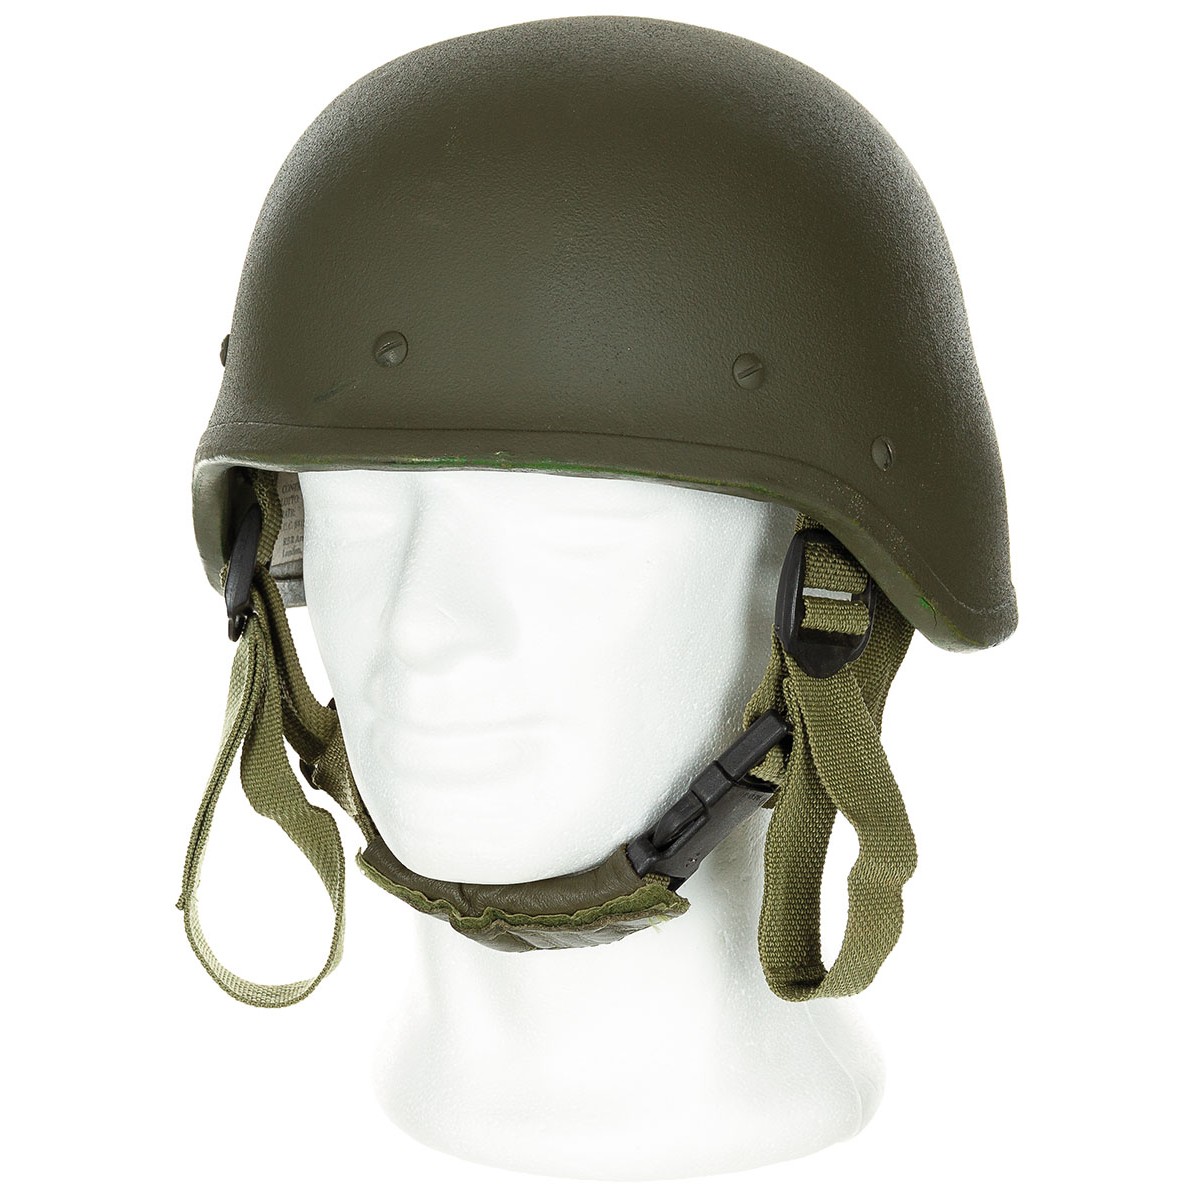 Original Italy Army Ballistic Helmet "T.P." - OD Green